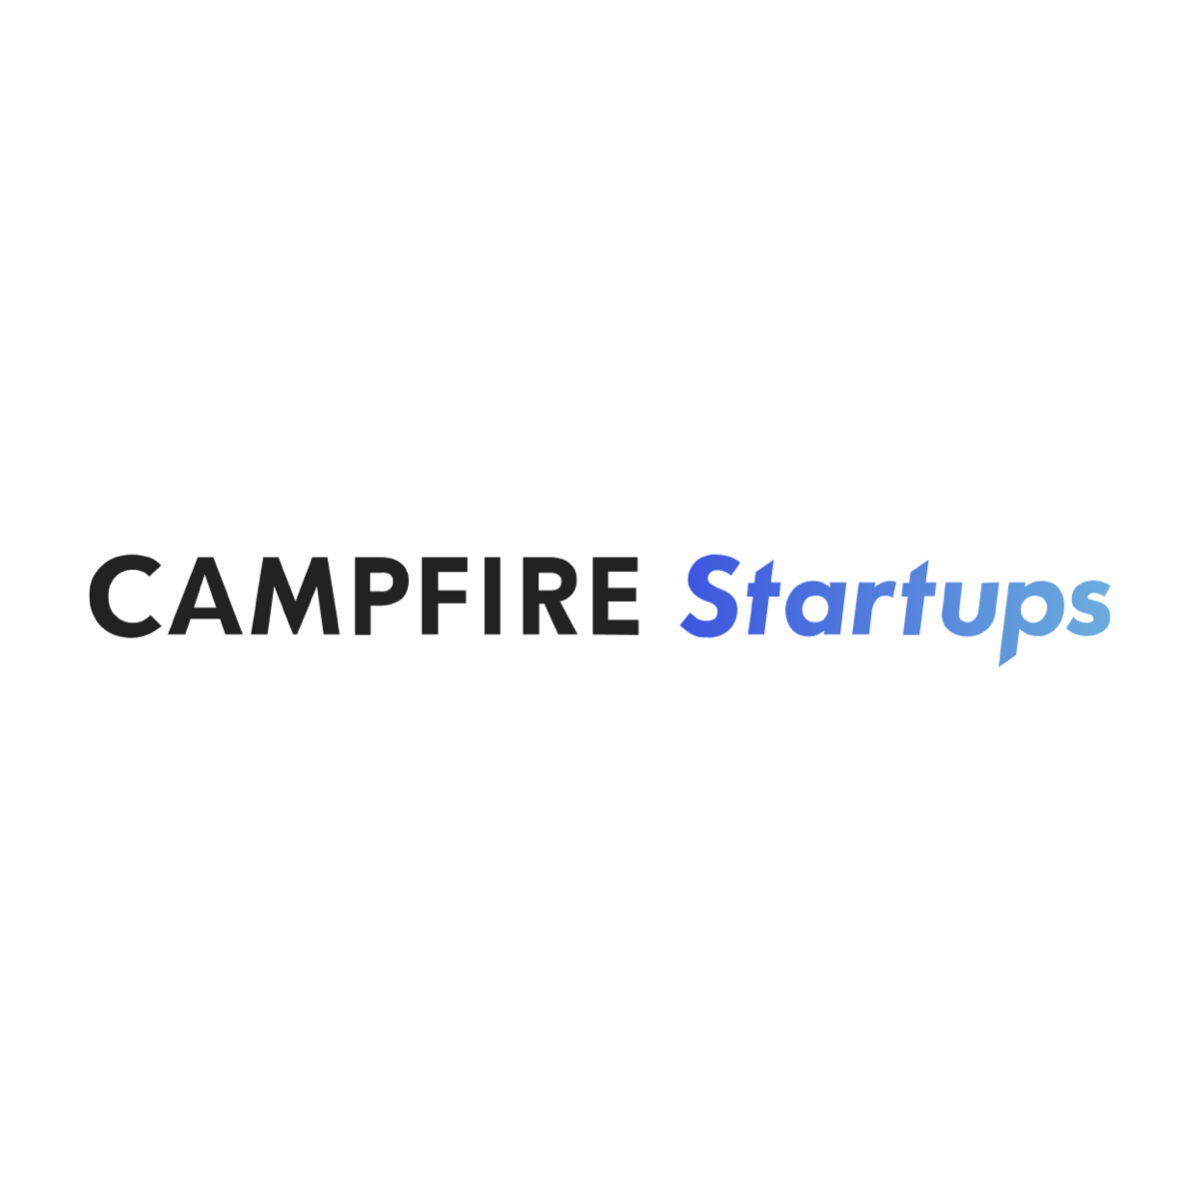 CAMPFIRE Startups